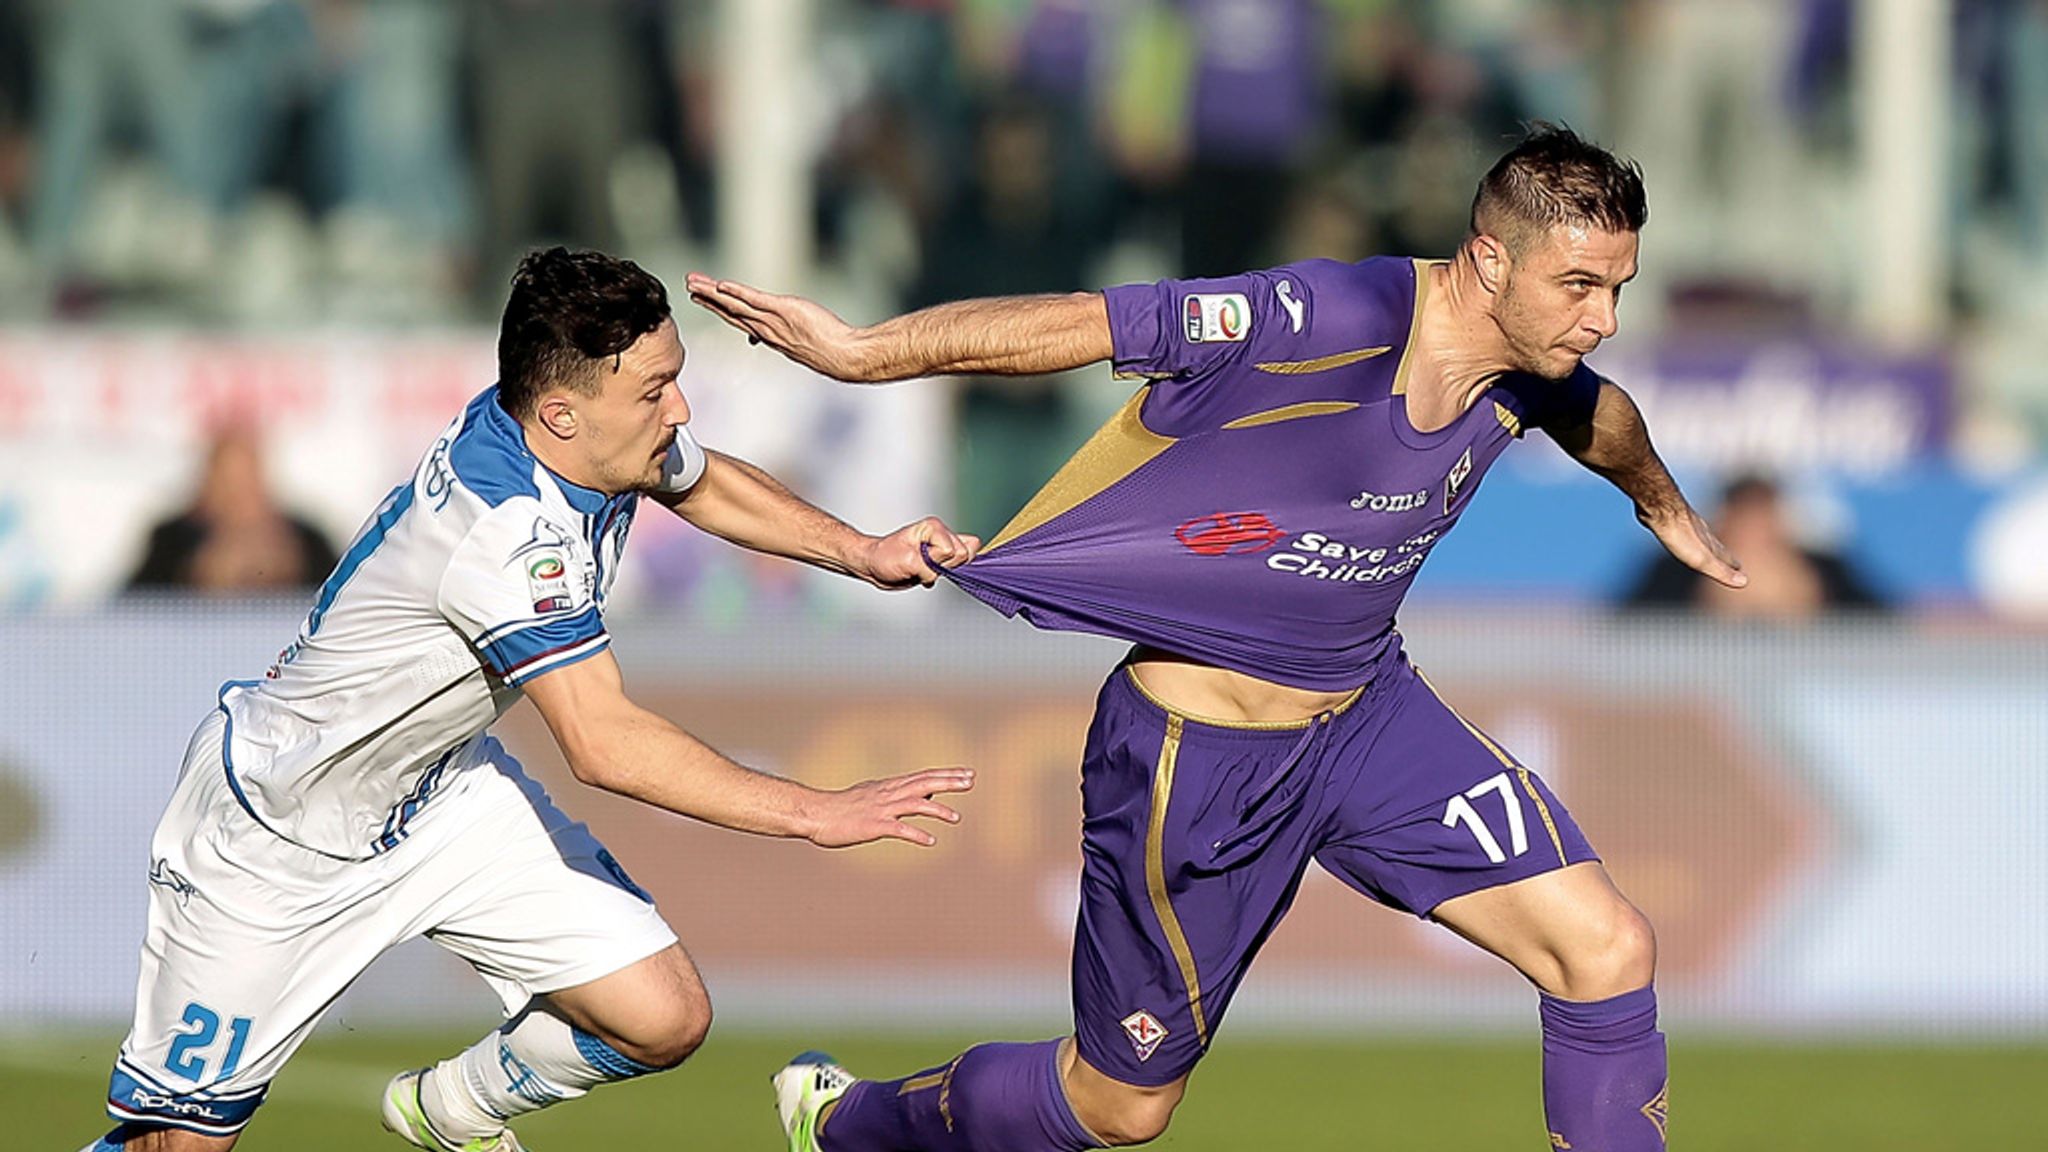 Fiorentina's unbeaten run at 14 after draw with Atalanta